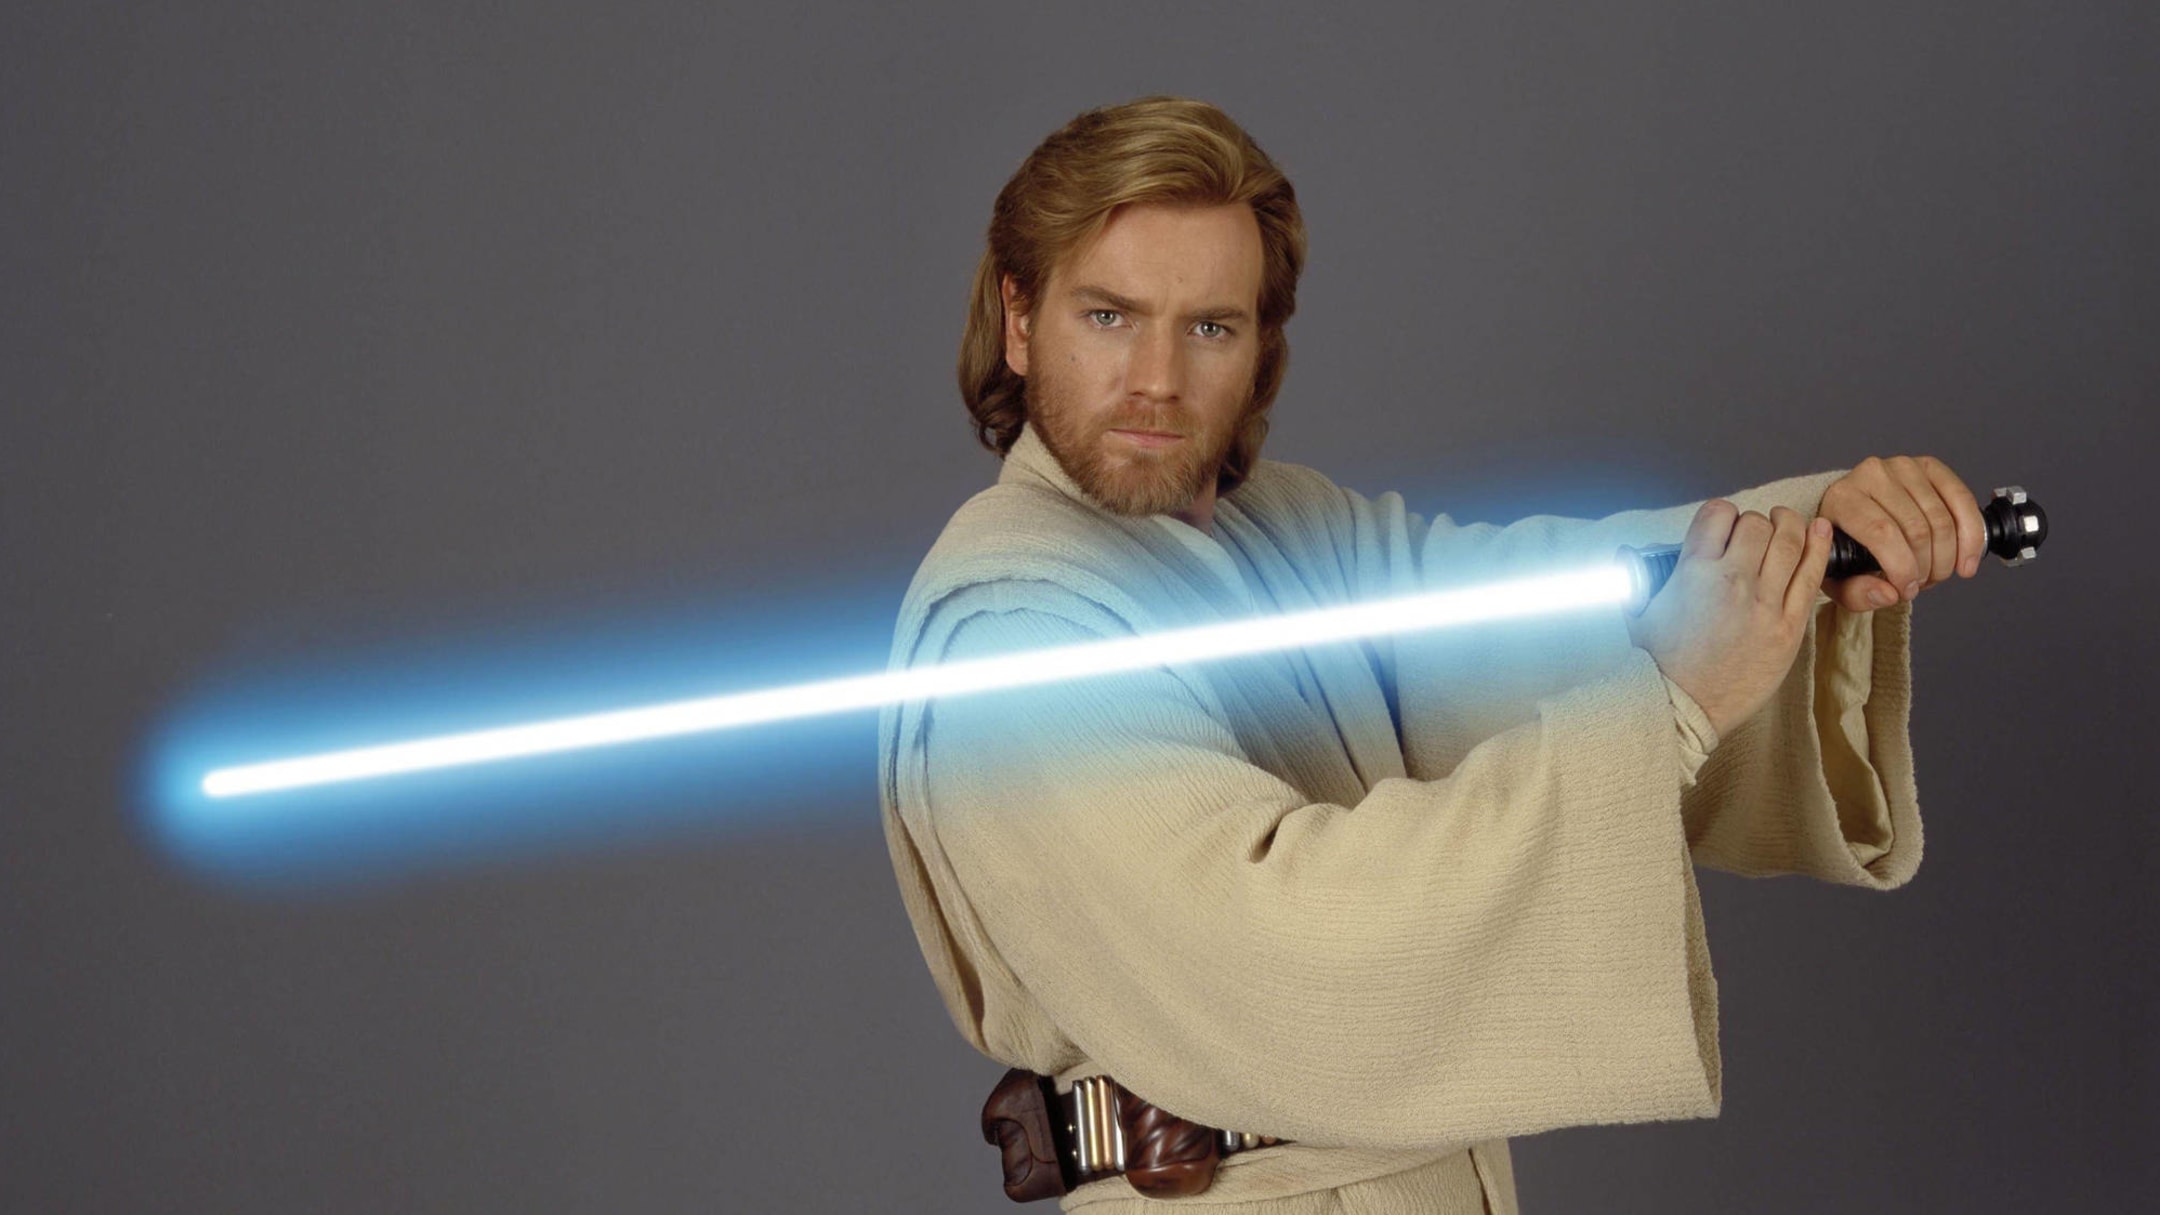 Obi-Wan Kenobi' Disney+ Series Adds Moses Ingram, Kumail Nanjiani and More  to Cast – The Hollywood Reporter